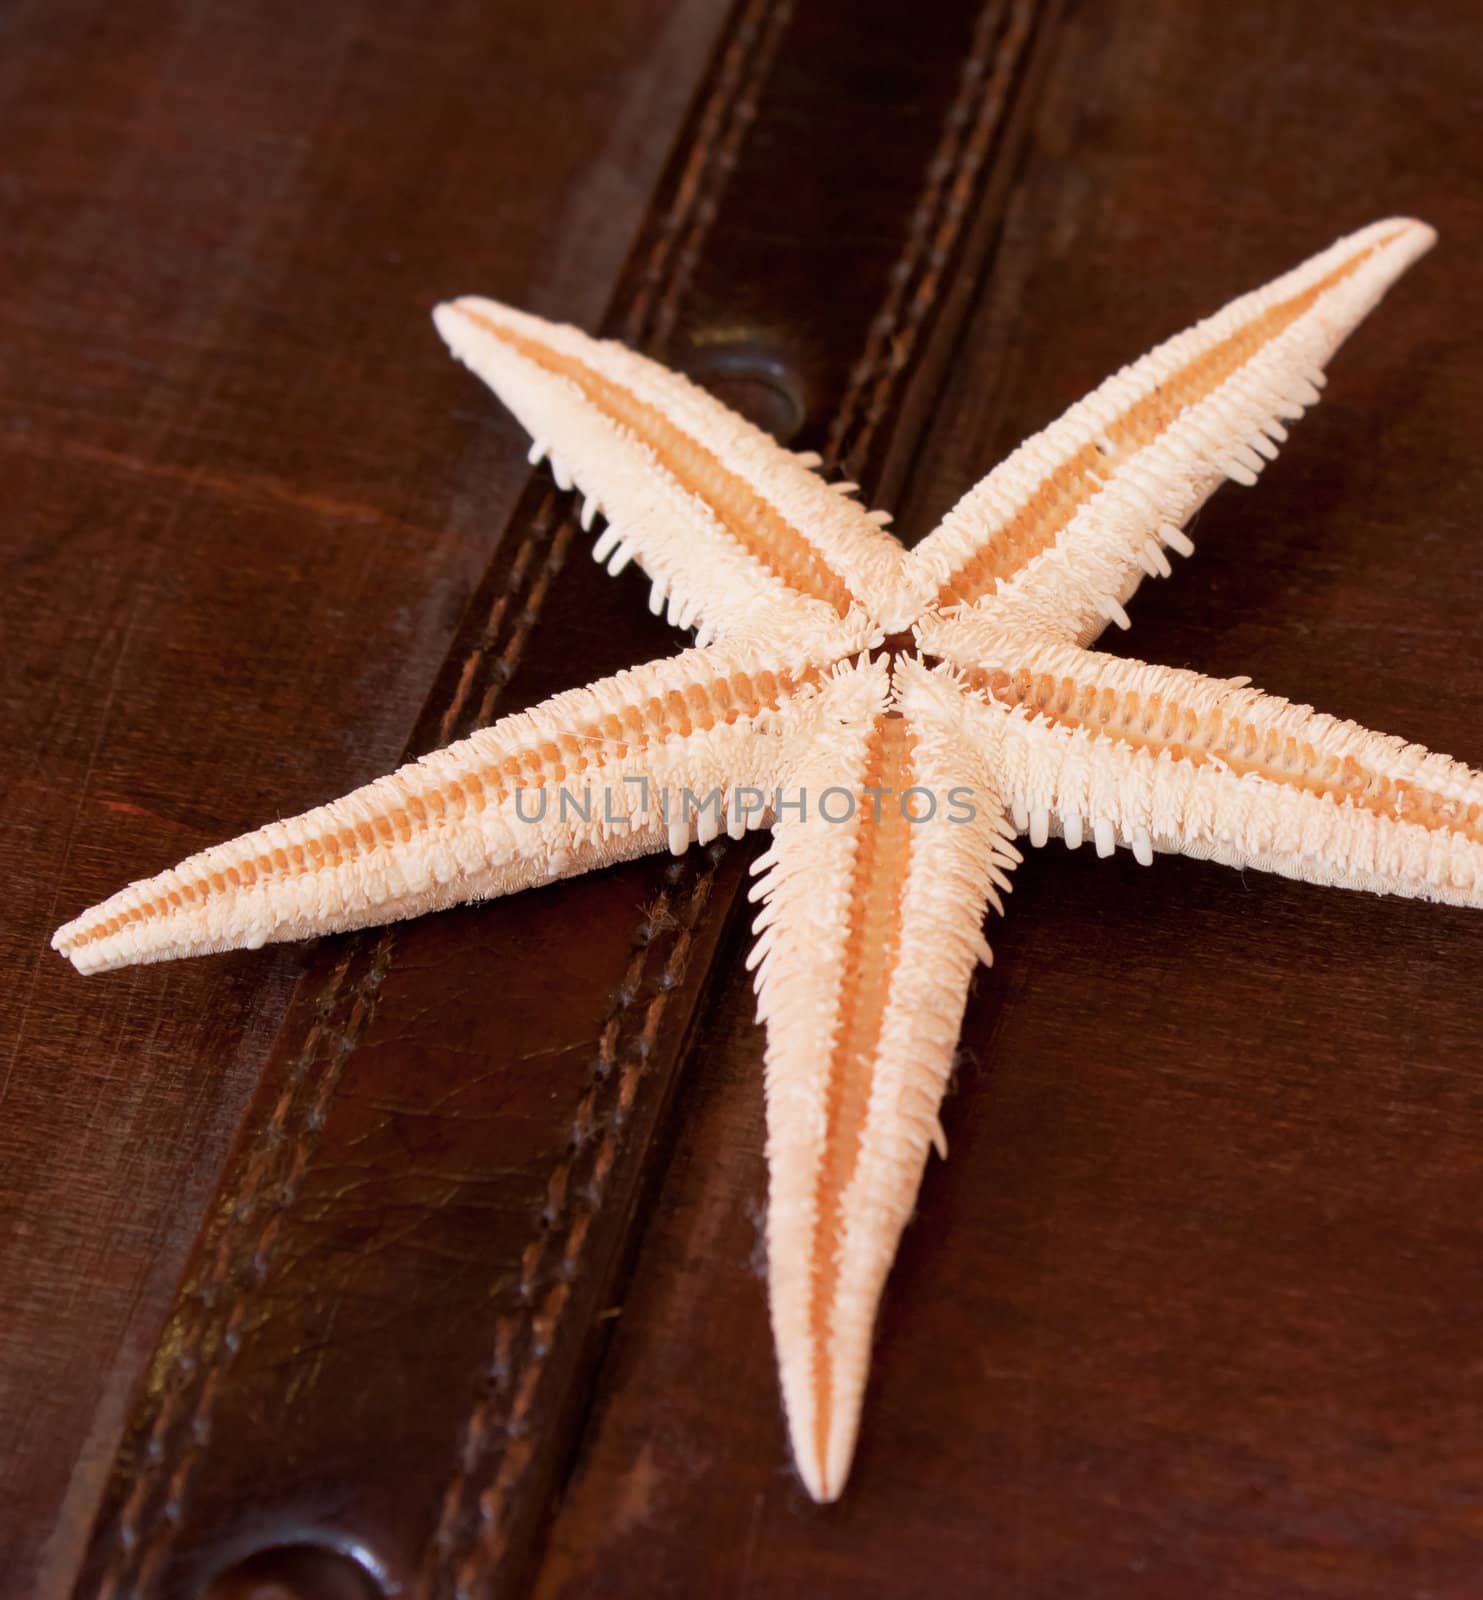 Nice starfish on leather suitcase